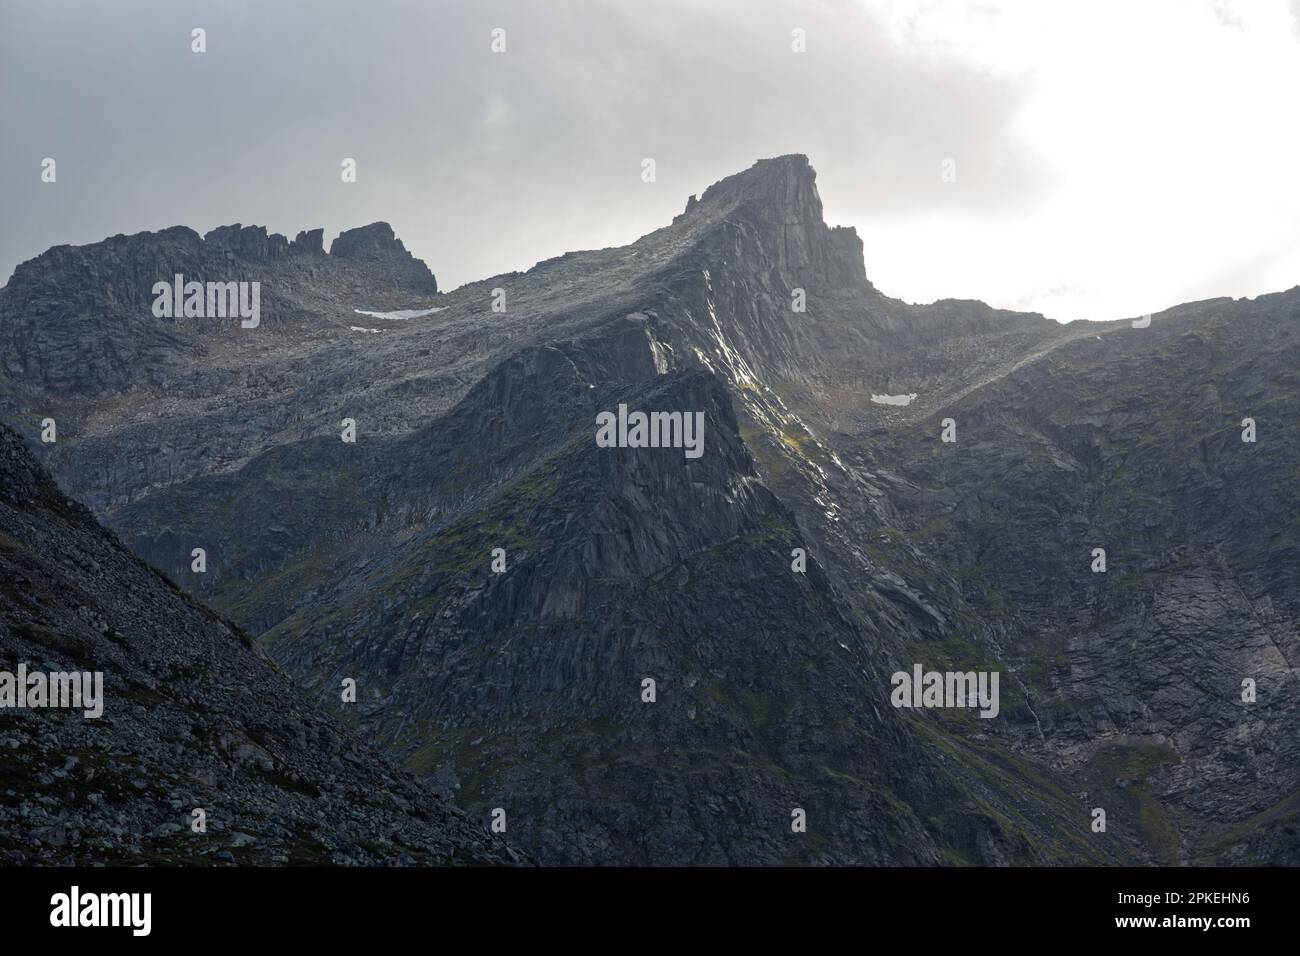 The rocky peaks of Kvaløya Island after rain Stock Photo